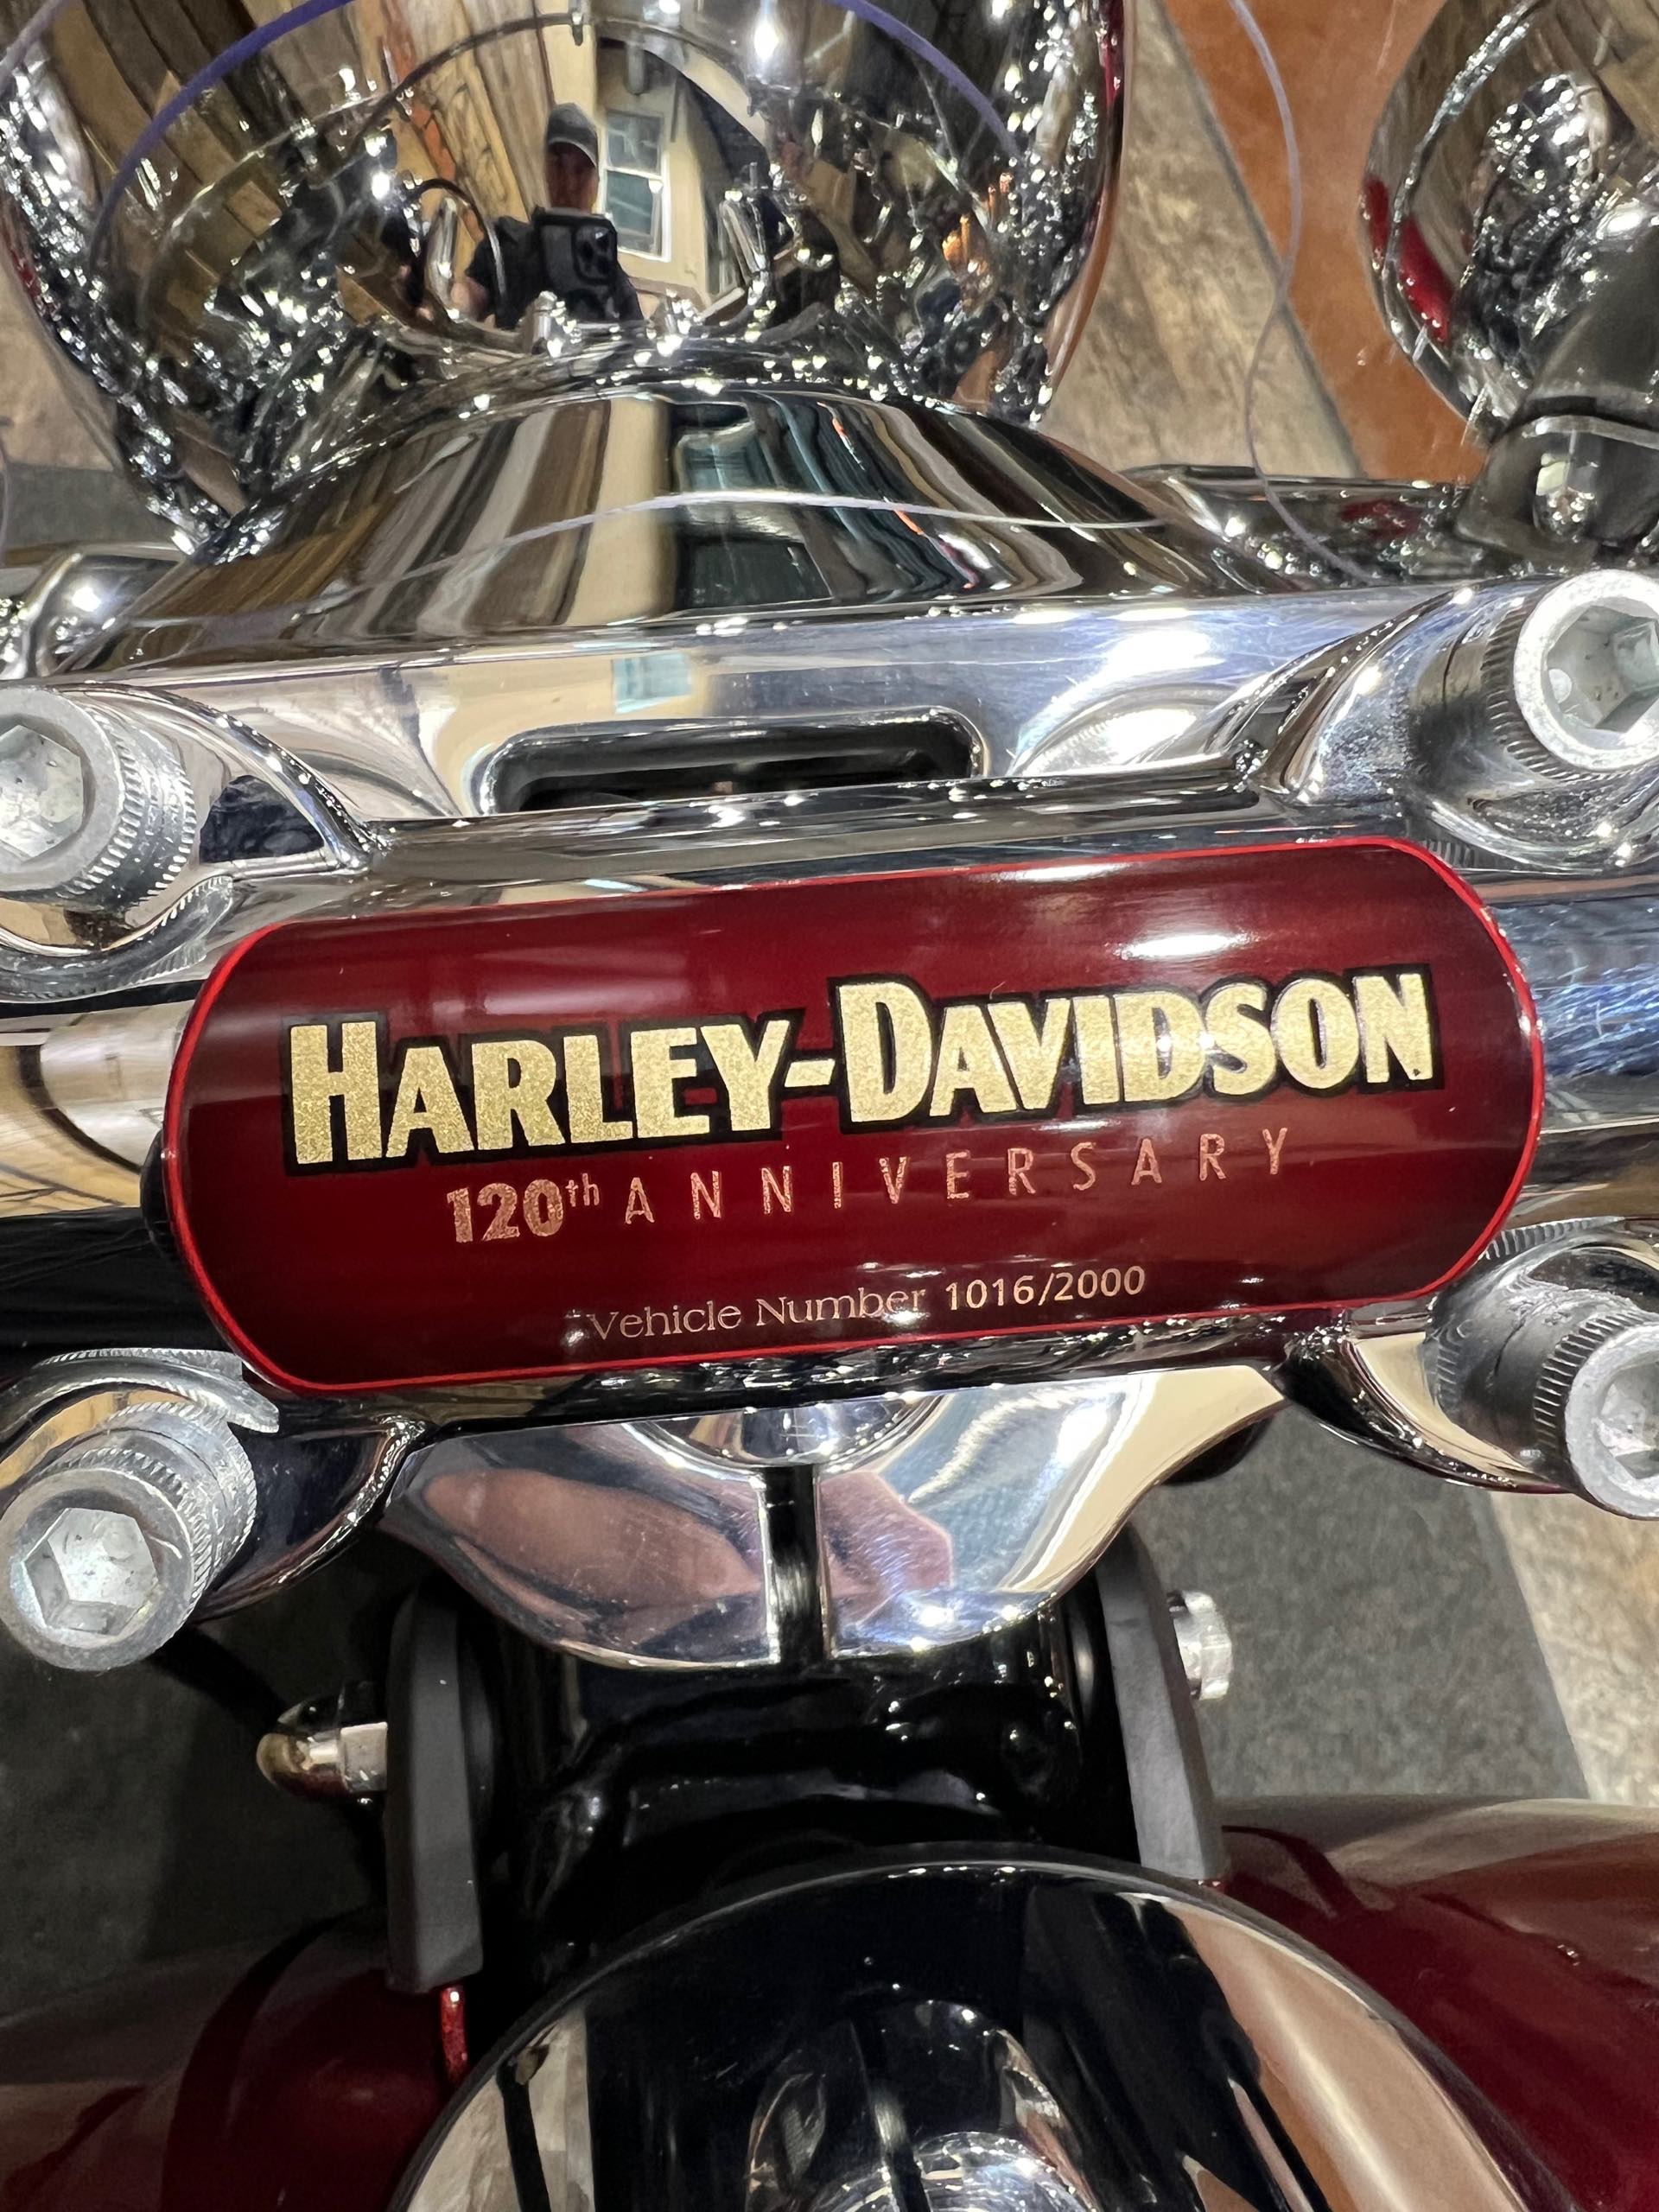 2023 Harley-Davidson Softail Heritage Classic Anniversary at Bull Falls Harley-Davidson